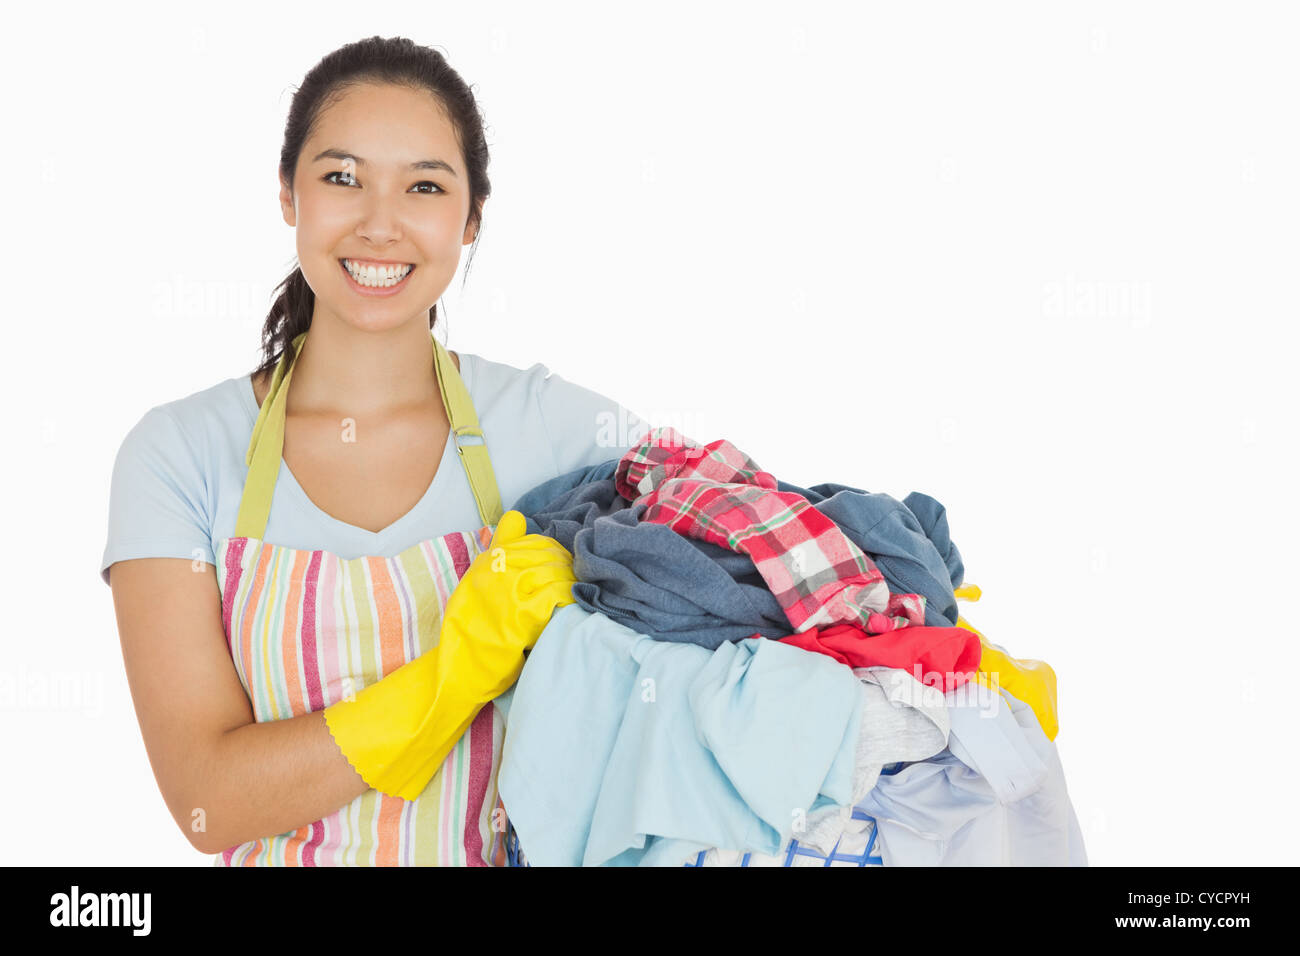 Laughing woman holding laundry basket Stock Photo